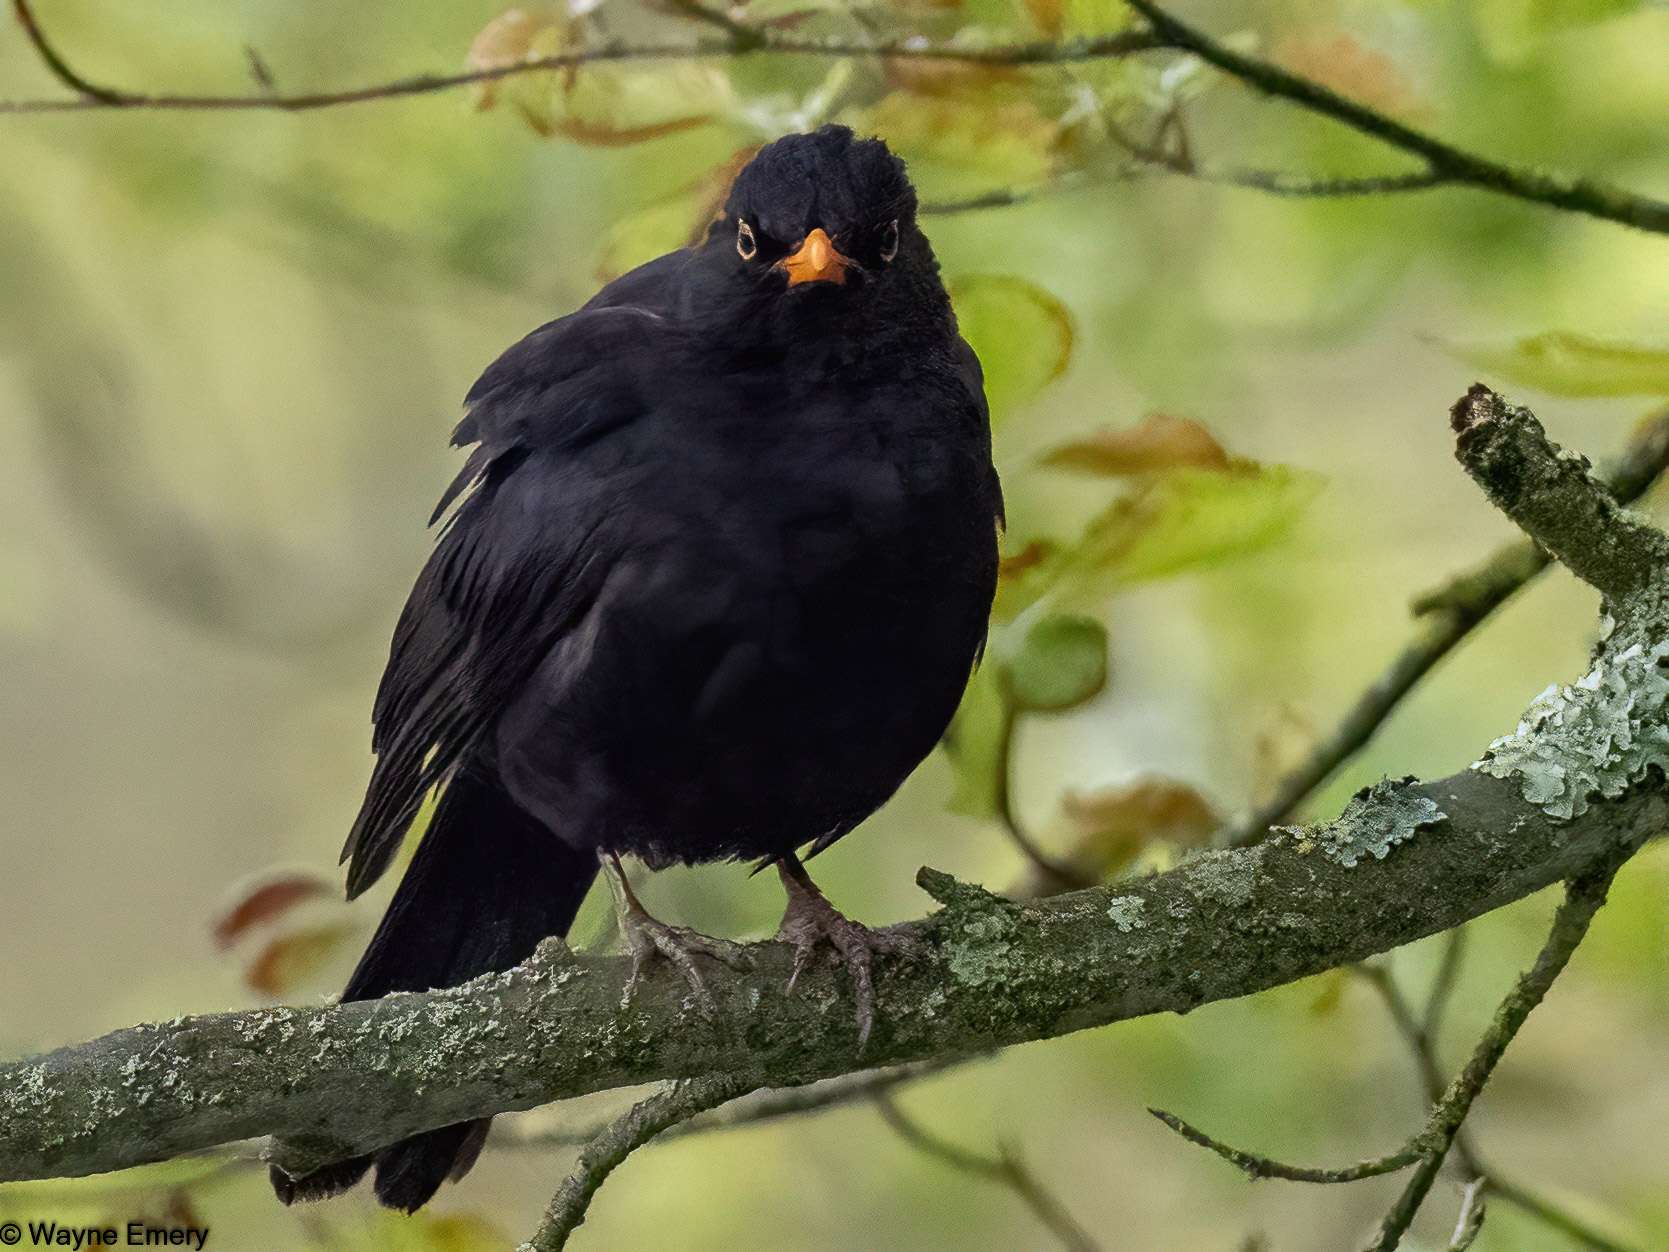 Blackbird by Wayne Emery at Saltram